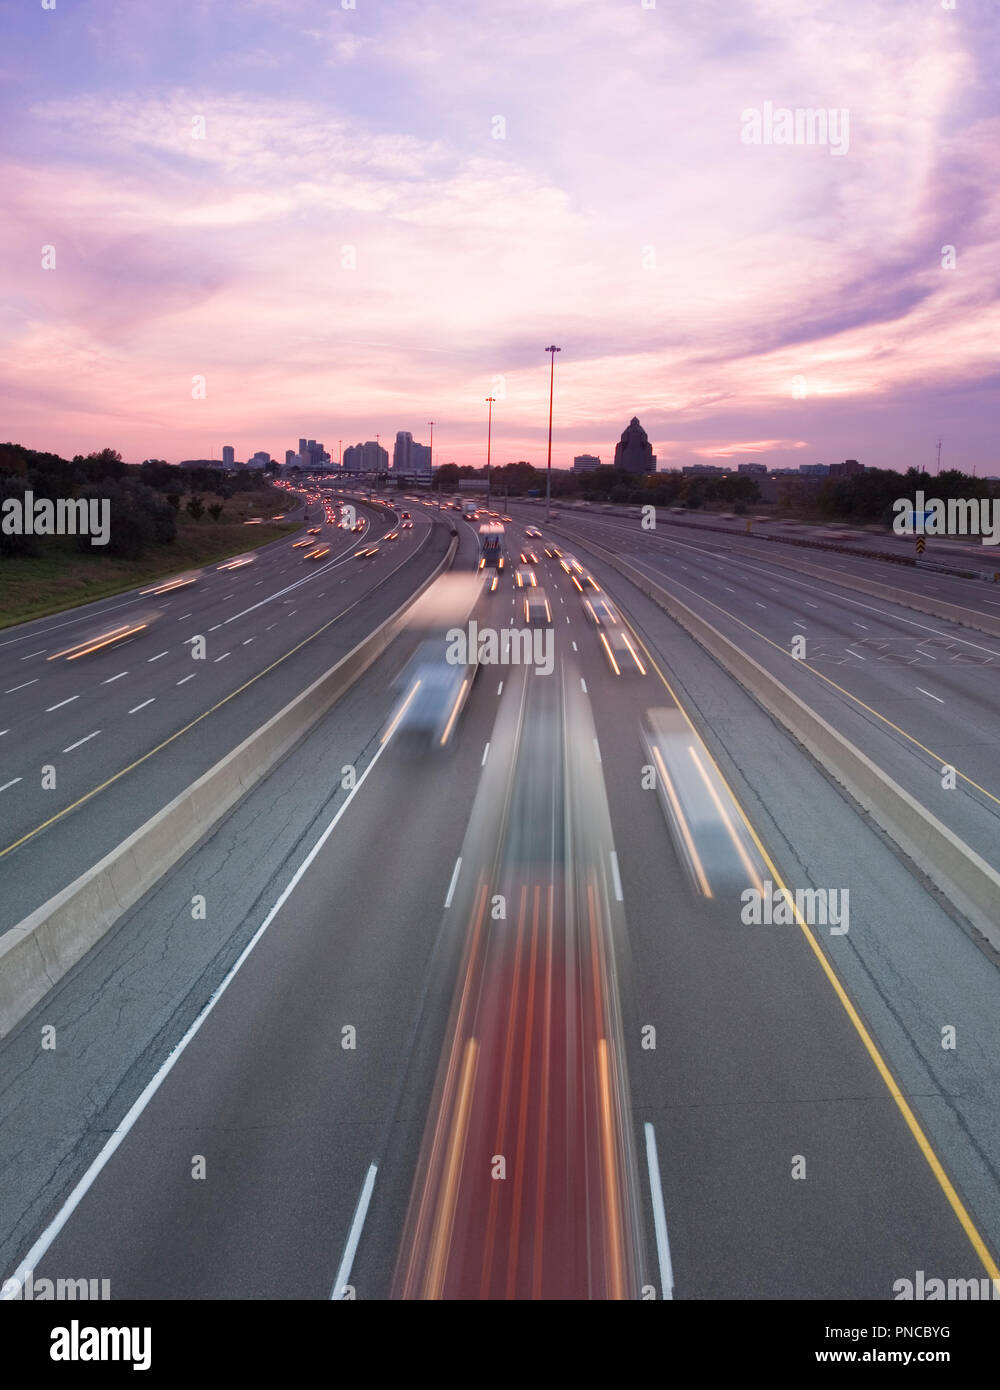 North America, Canada, Ontario, Toronto, traffic on highway at dusk Stock Photo